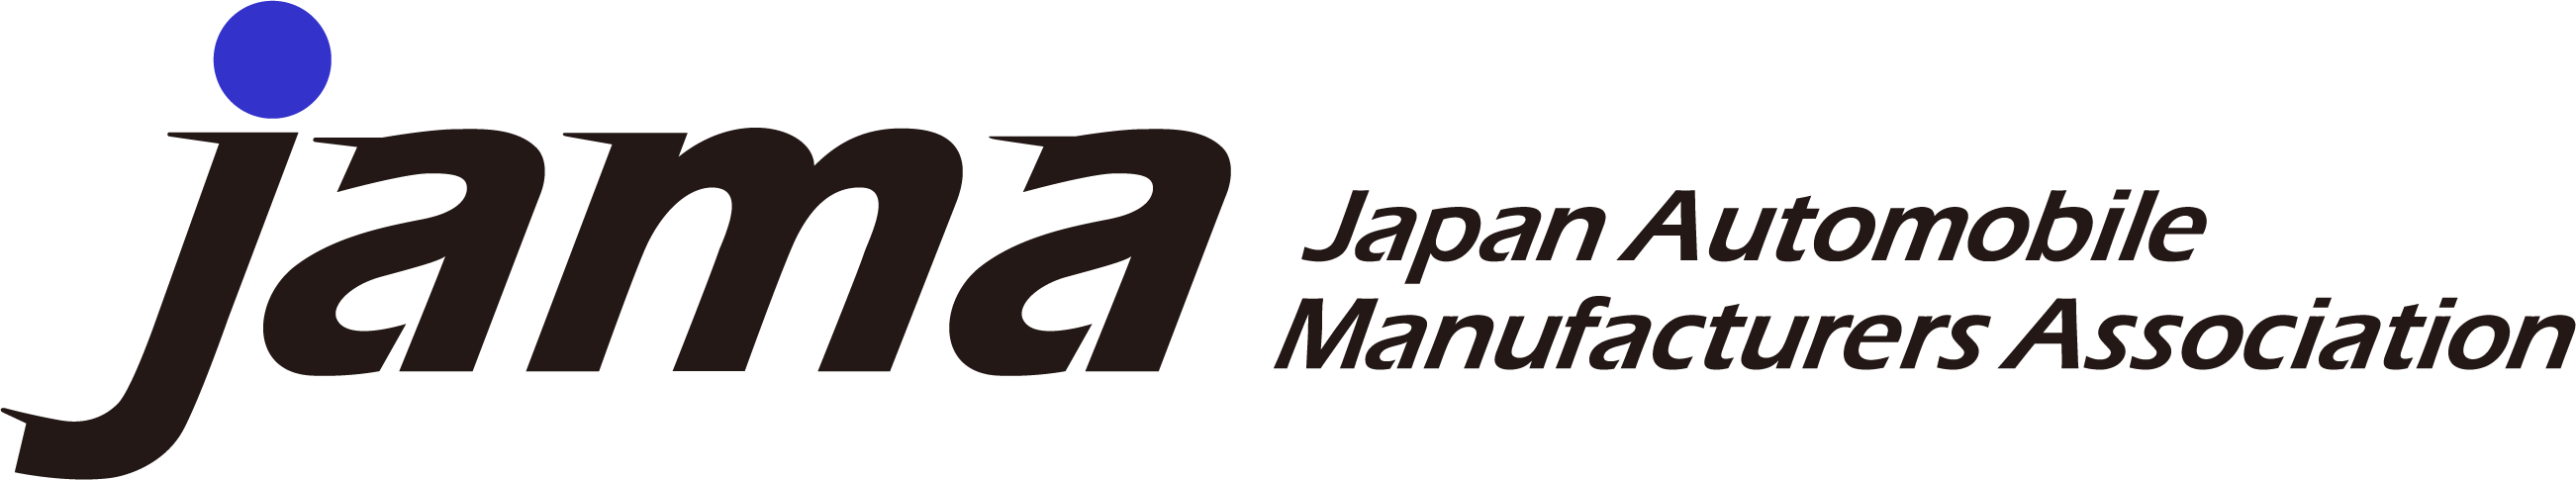 Japan Automobile Manufacturers Association